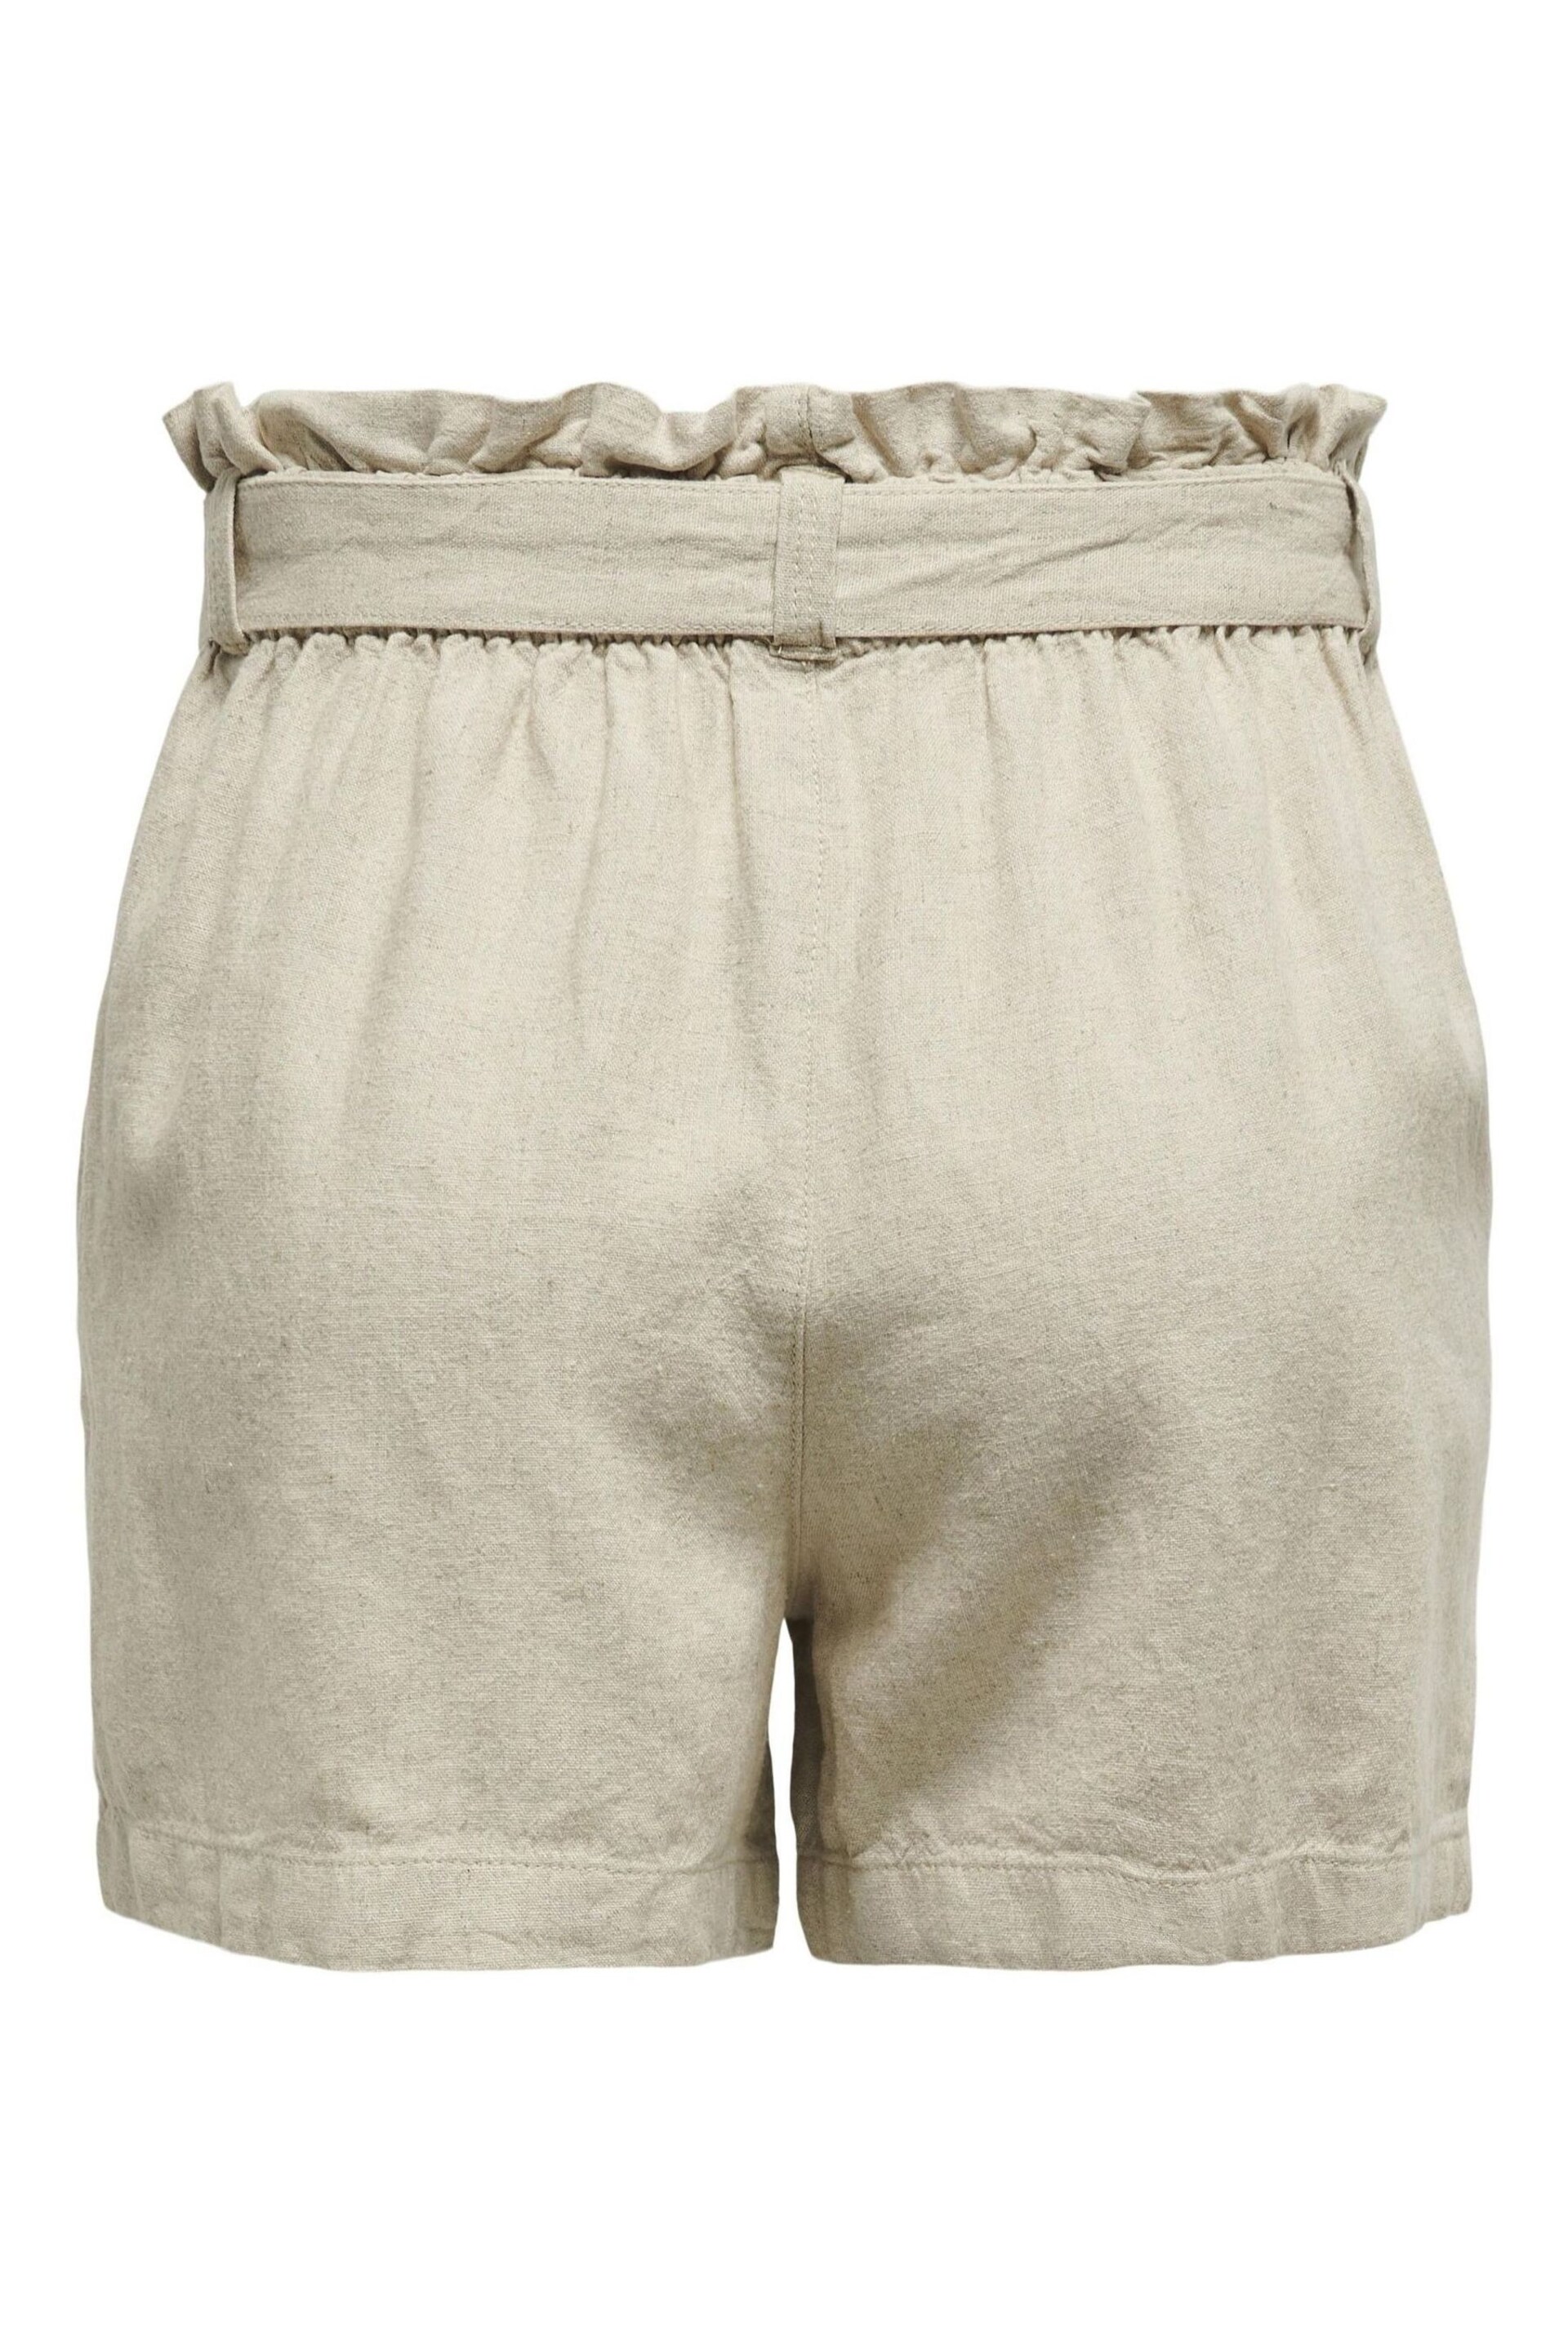 JDY Cream Linen Mix Tie Waist Shorts - Image 6 of 6